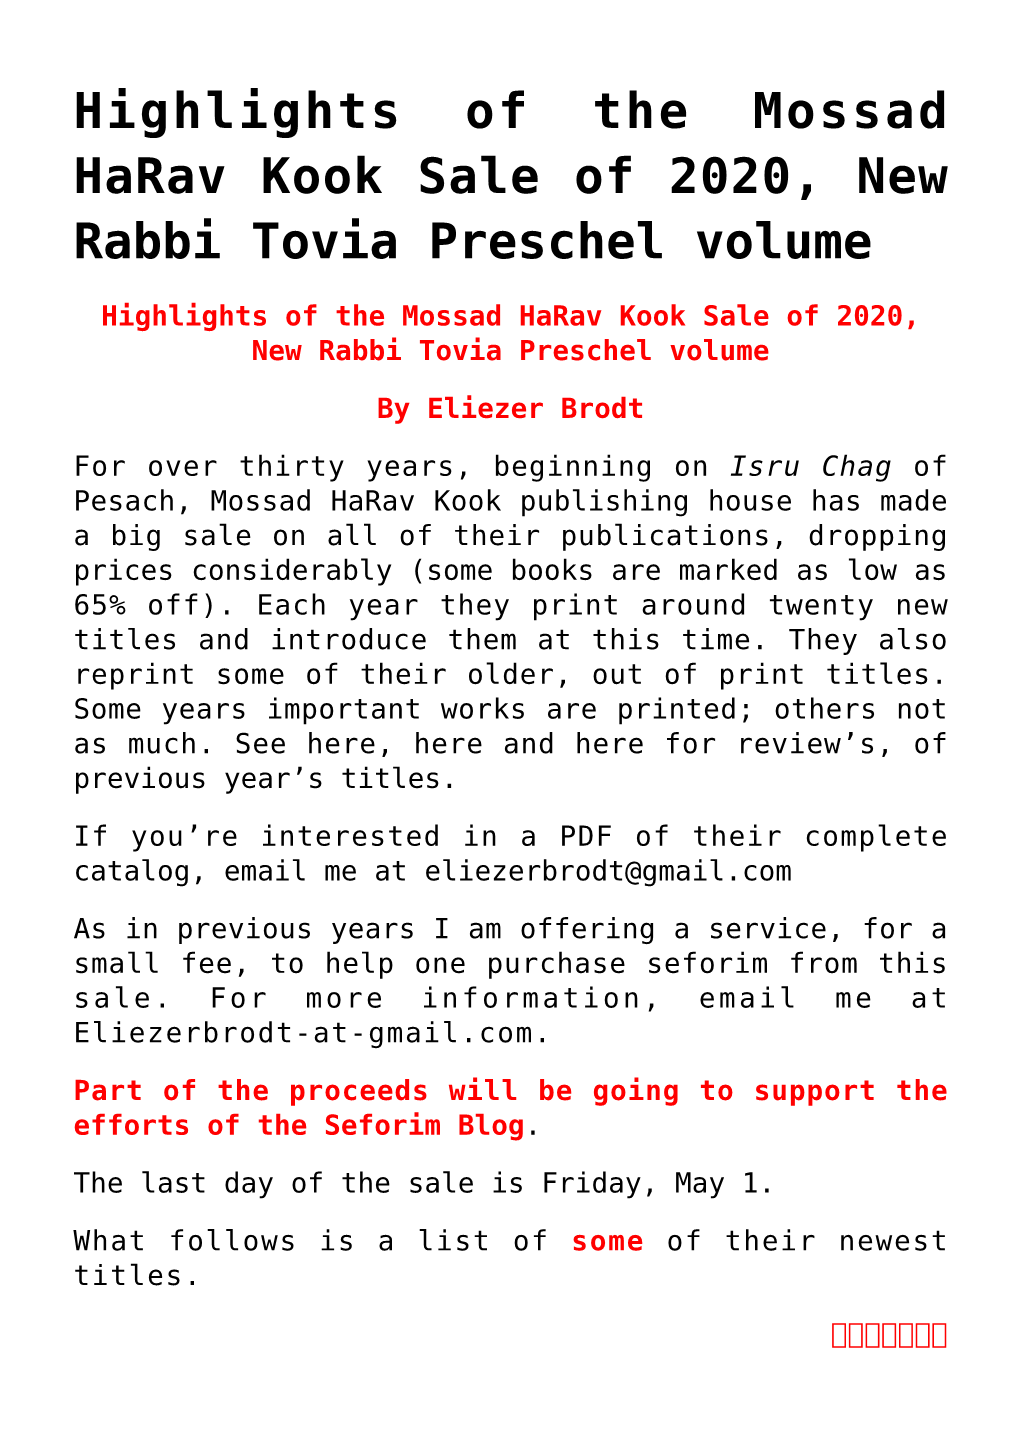 Highlights of the Mossad Harav Kook Sale of 2020, New Rabbi Tovia Preschel Volume